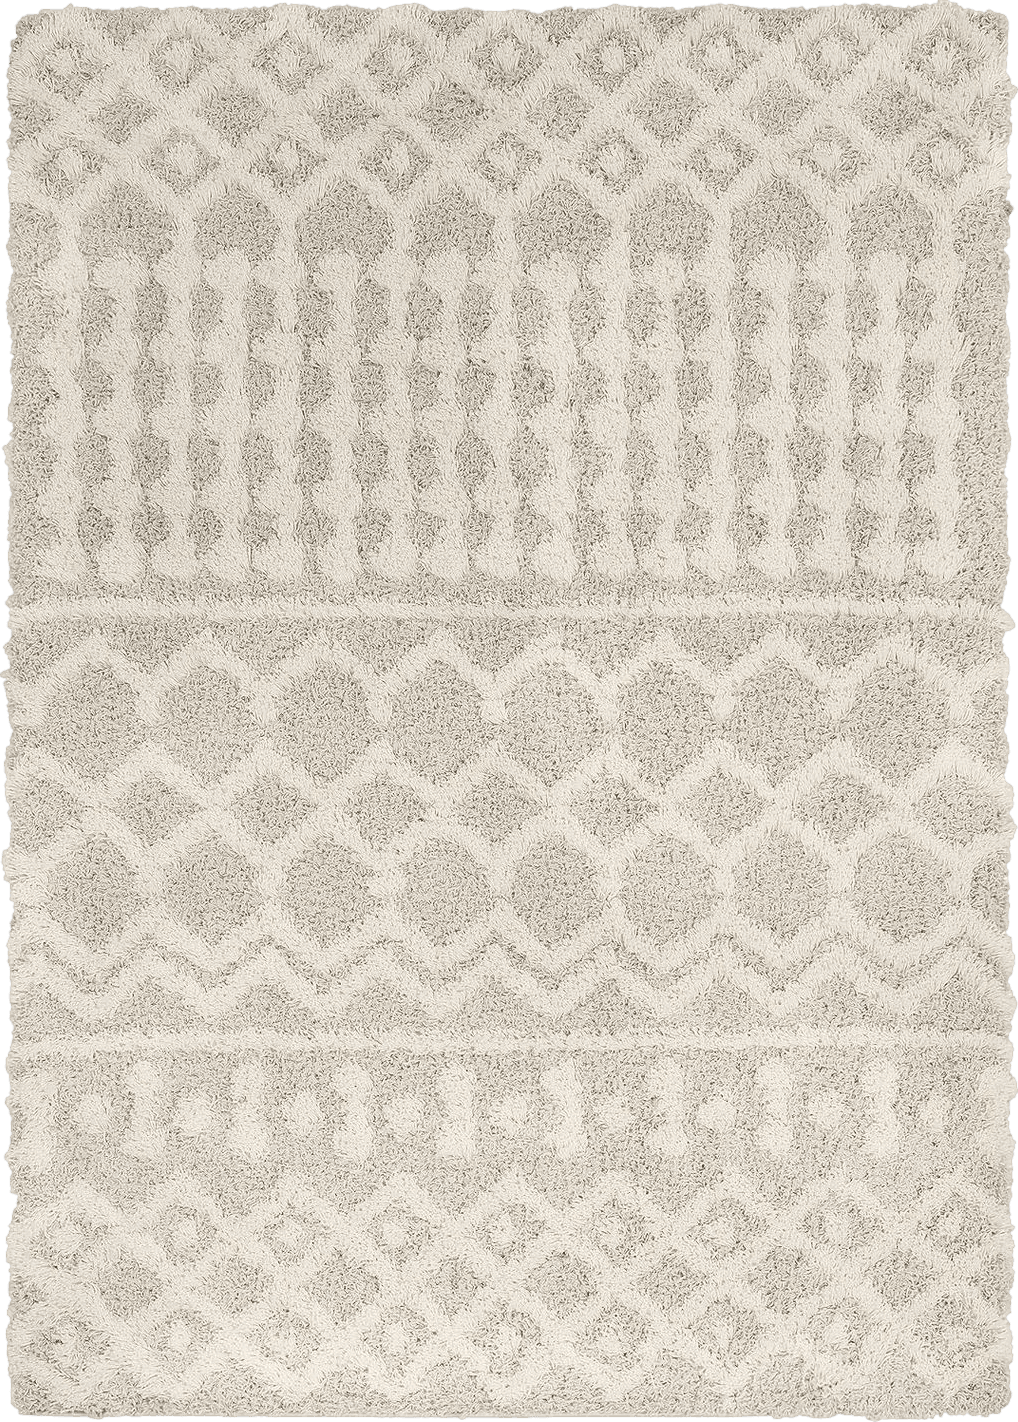 Disney Artistic Weavers Hapsburg Moroccan Shag Area Rug, 5'3" x 7'3", Beige